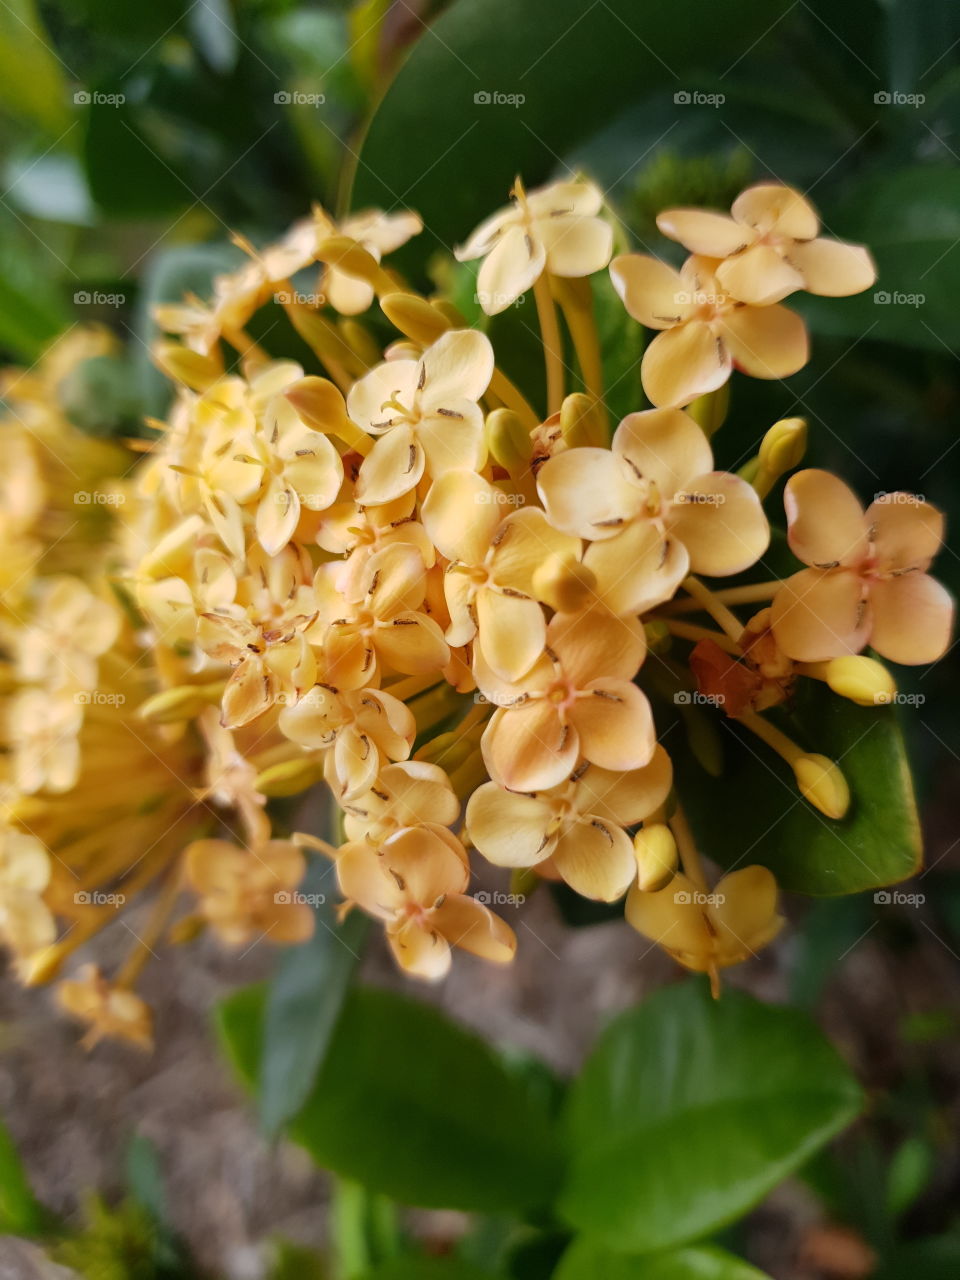 Small yellow bush flowers